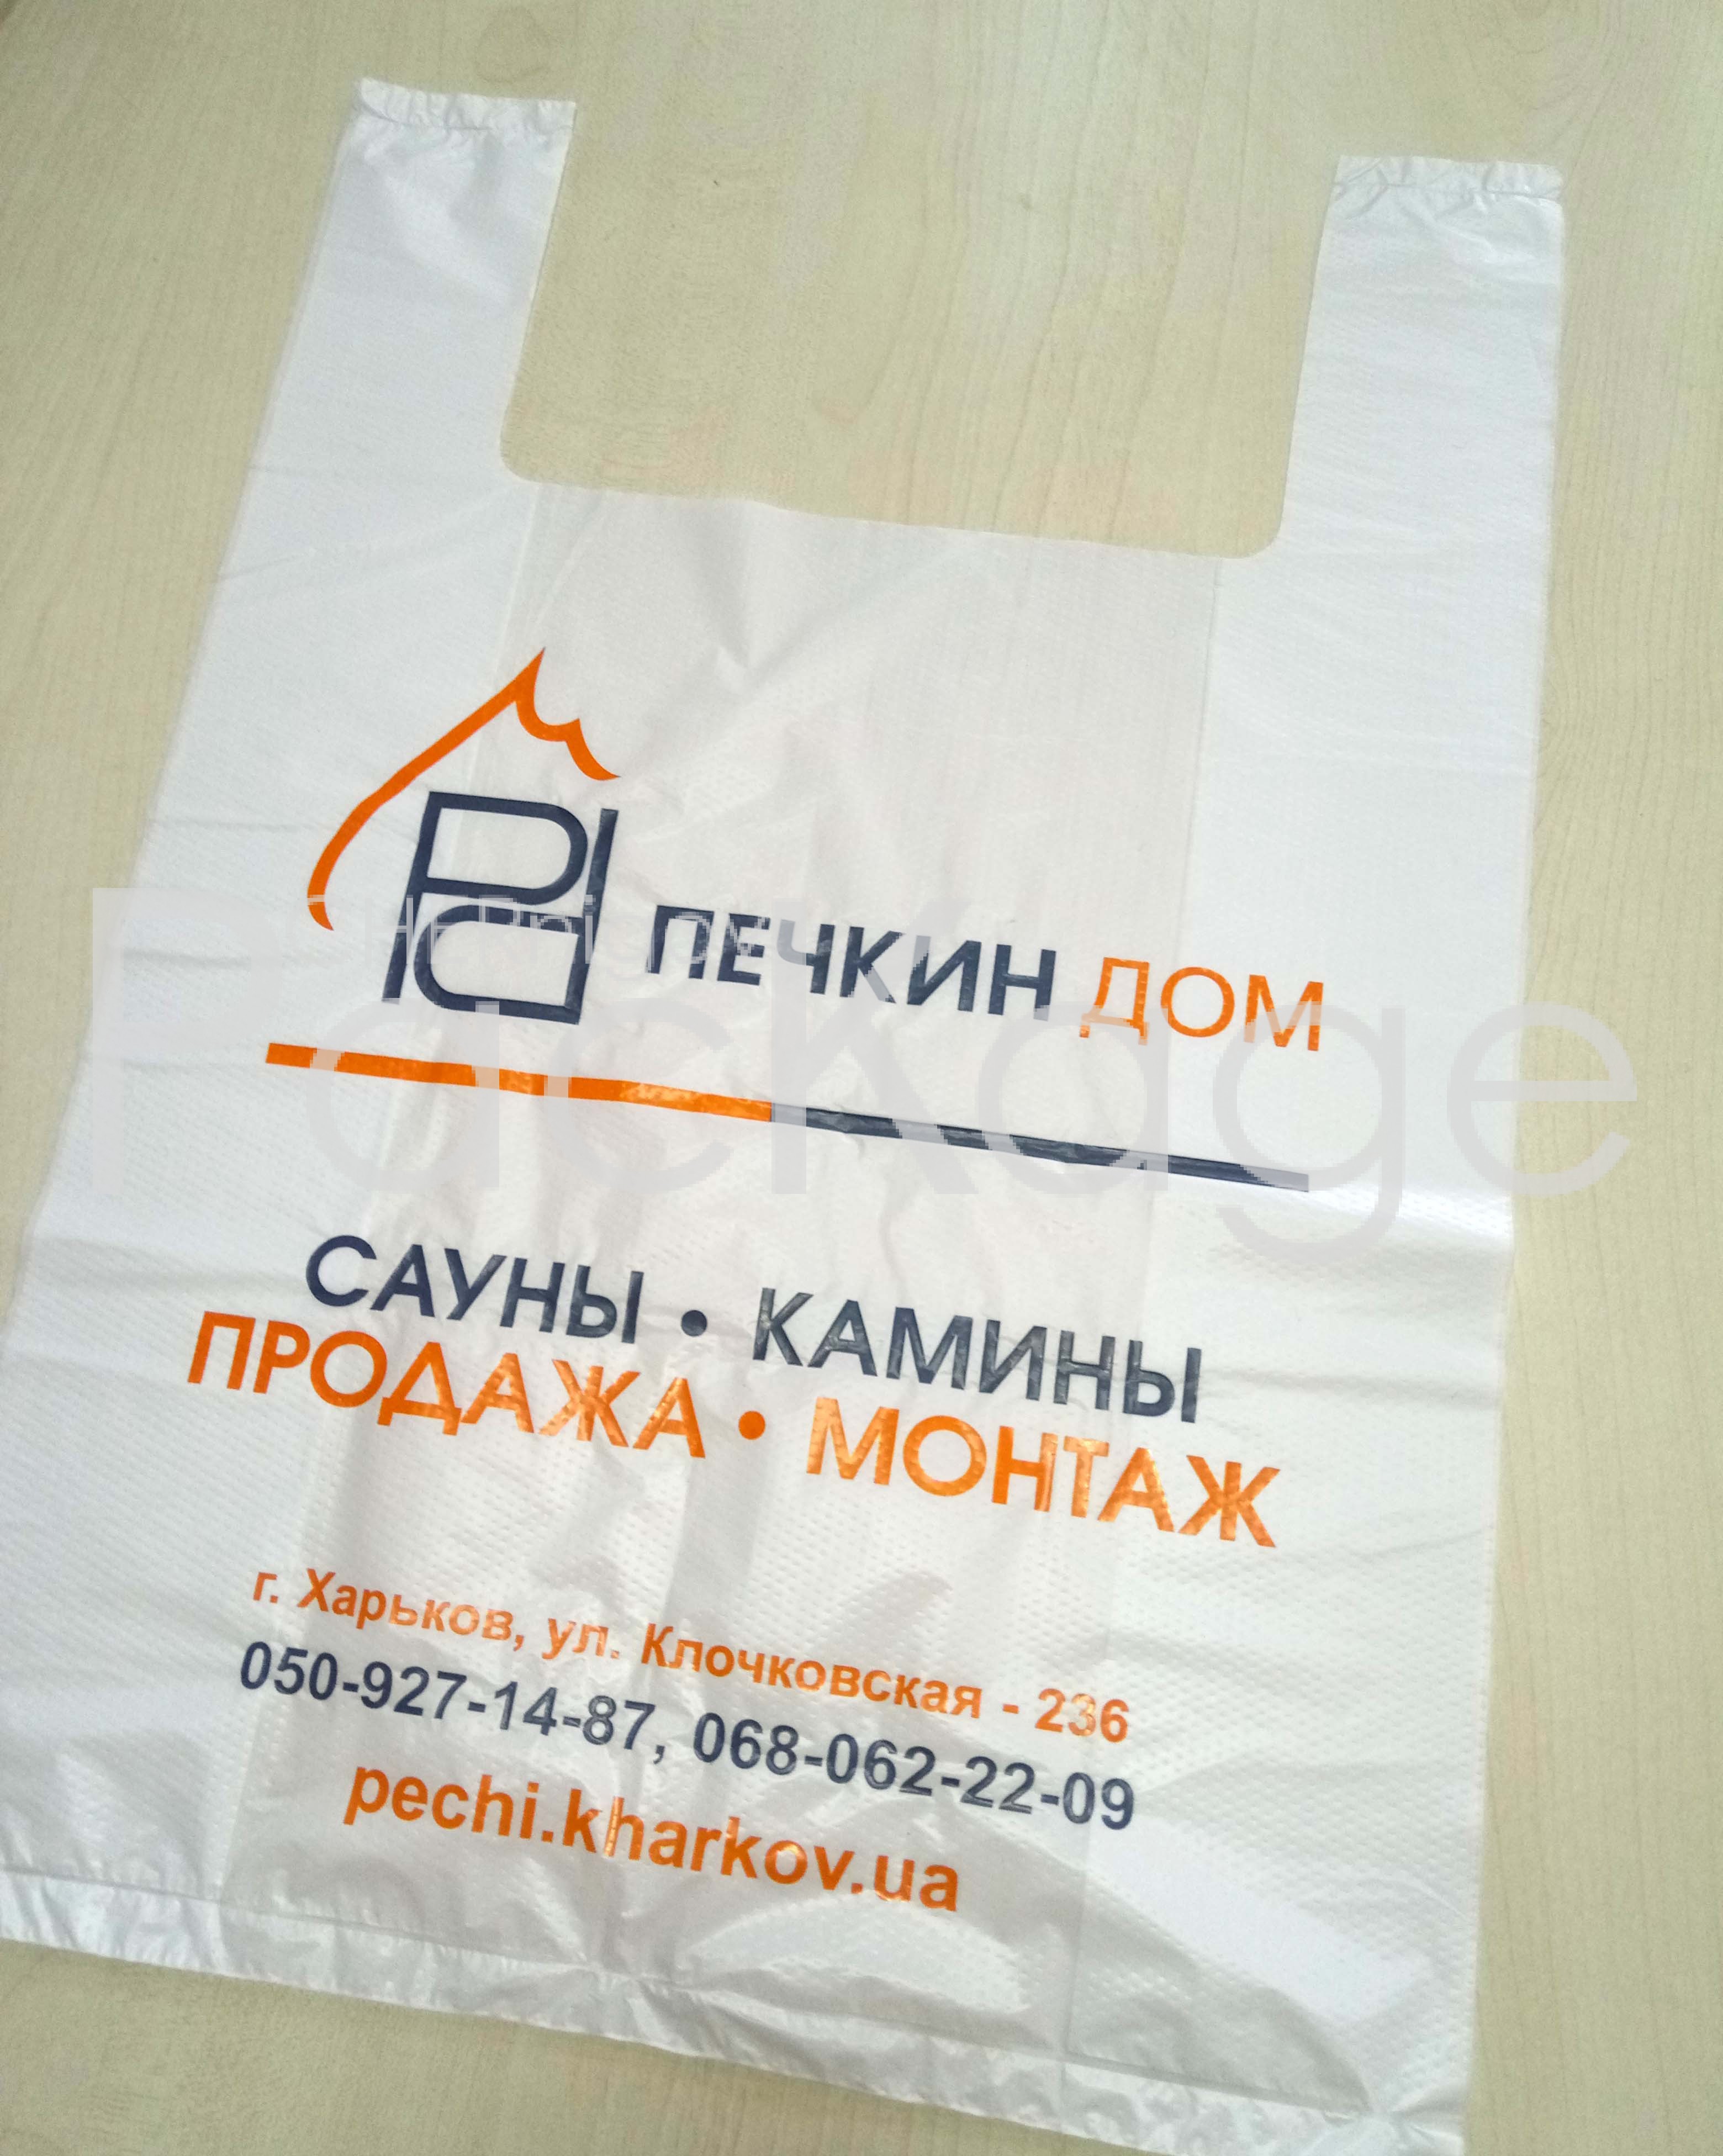 Грузоподъемность пакета “майка” Chernigov Package - Photo P70310-104429